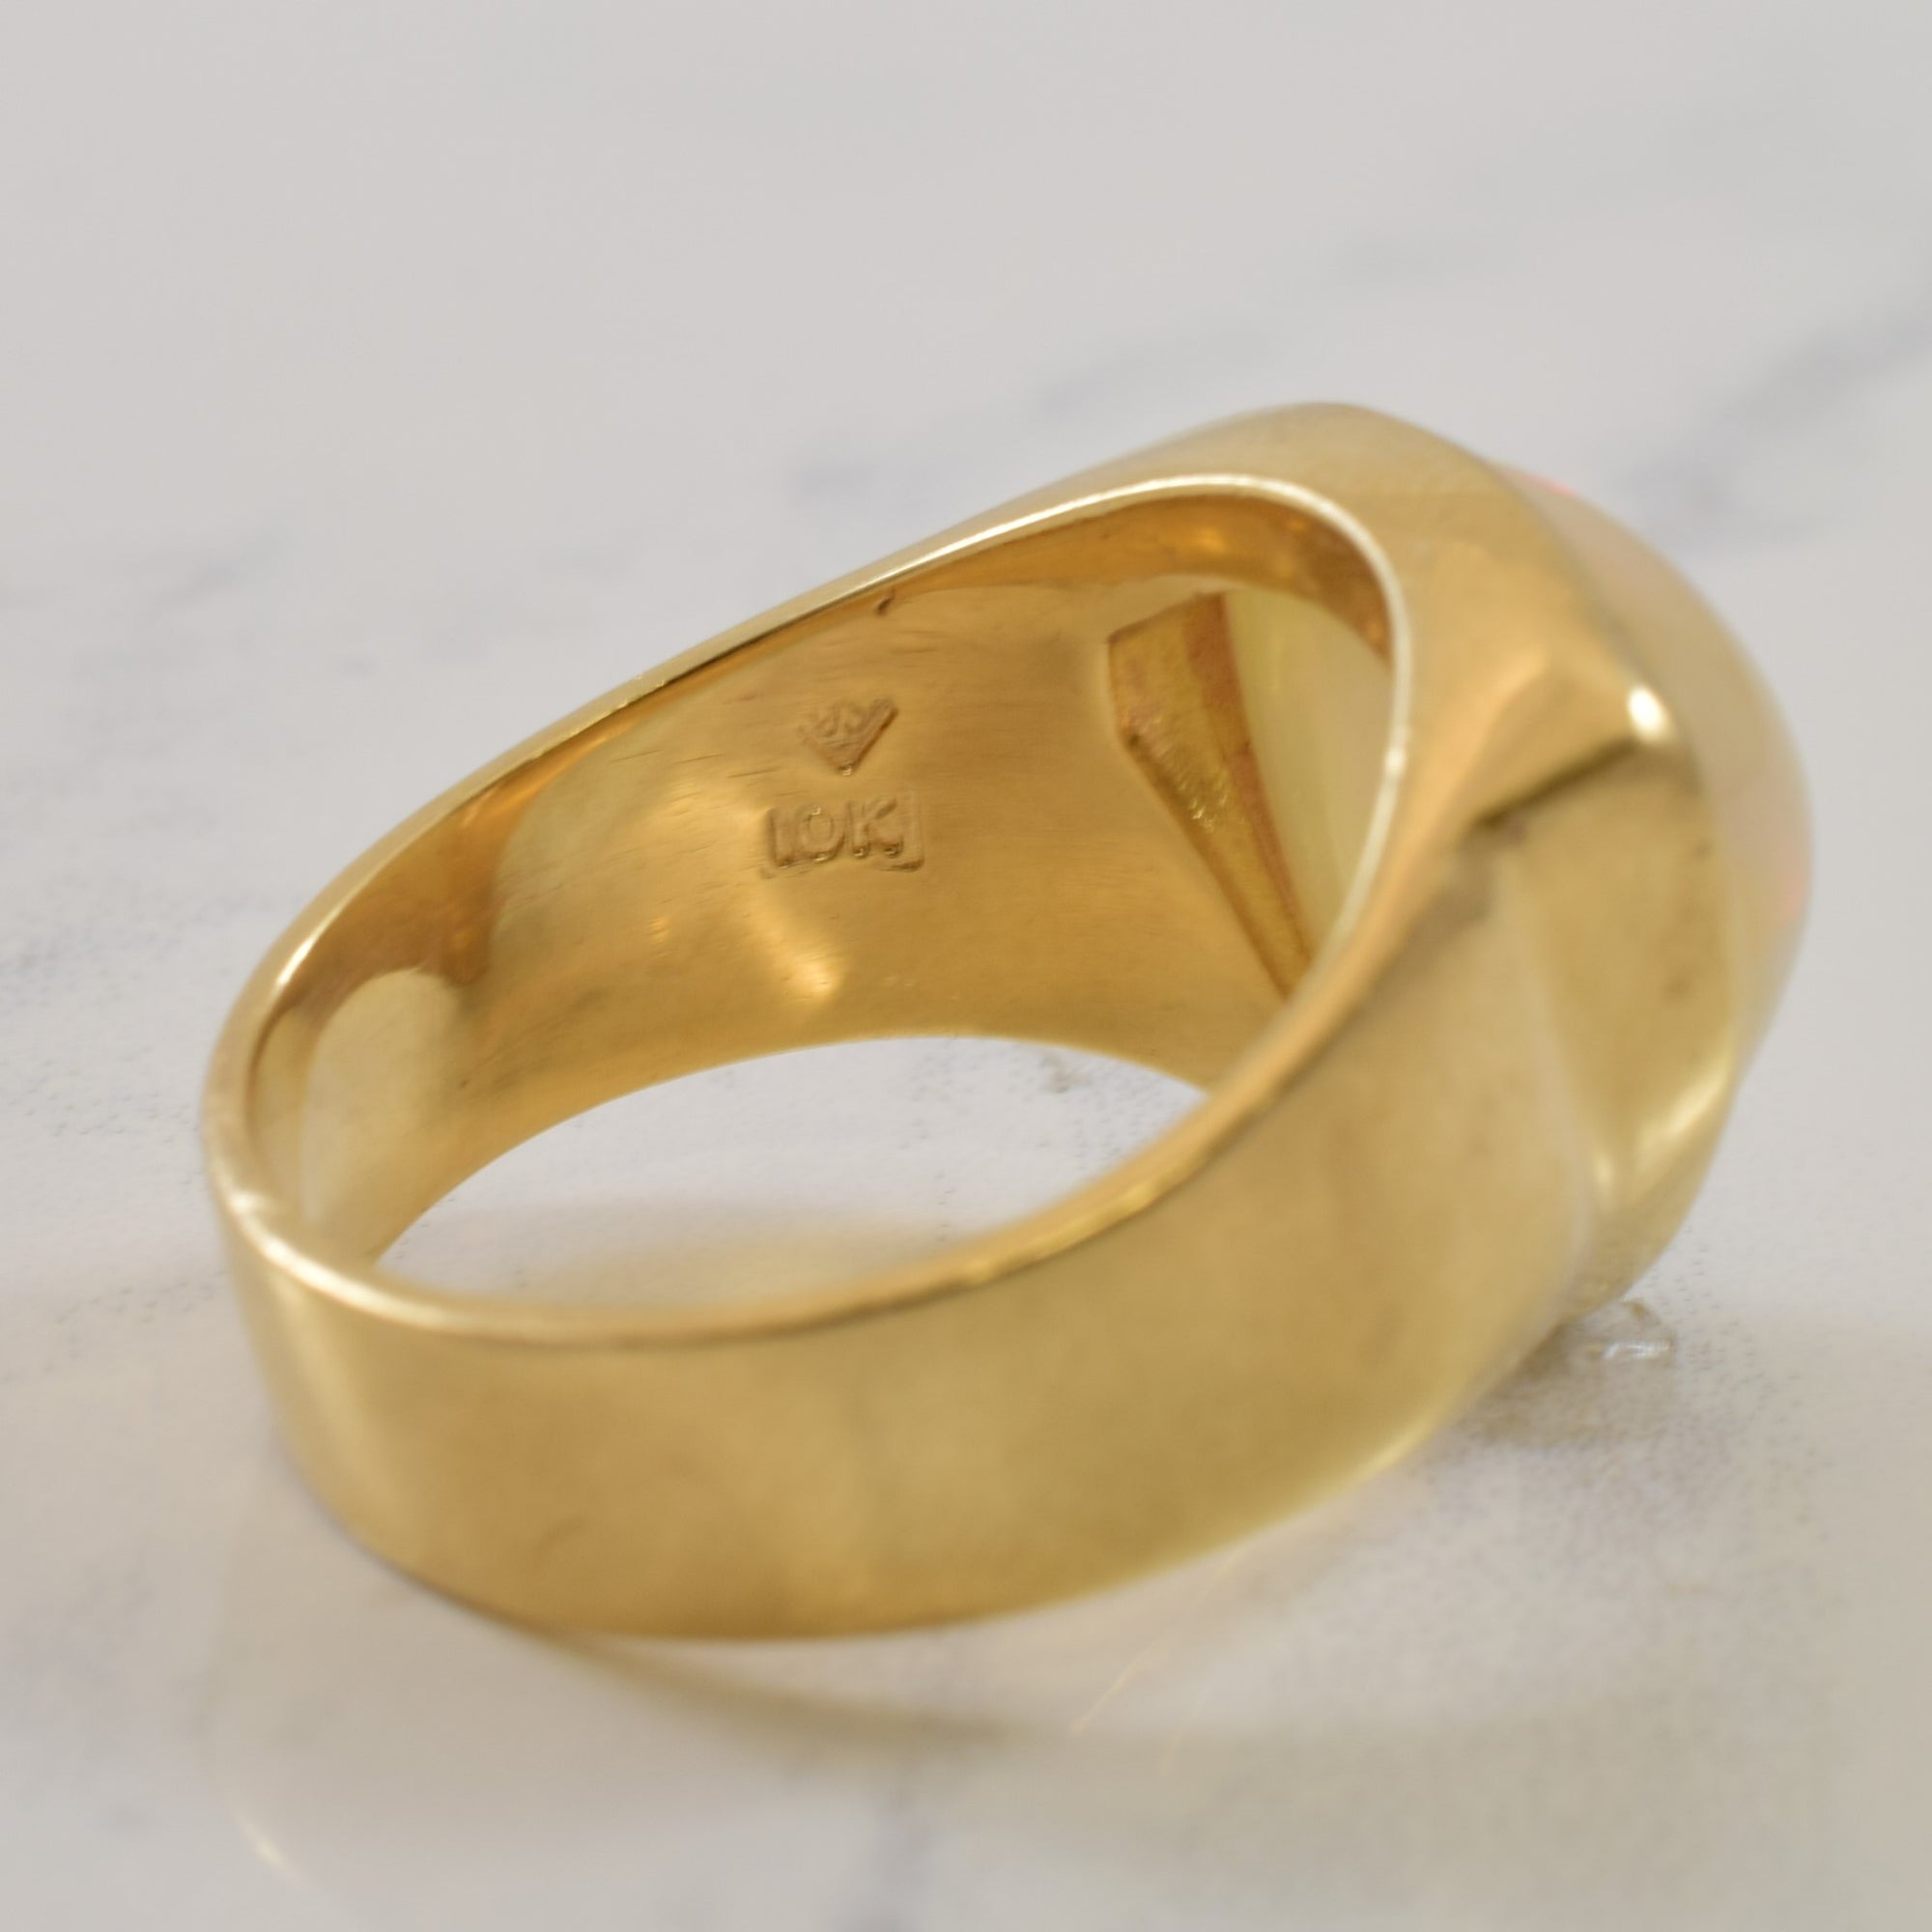 Trillion Cabochon Opal Ring | 6.00ct | SZ 8.5 |